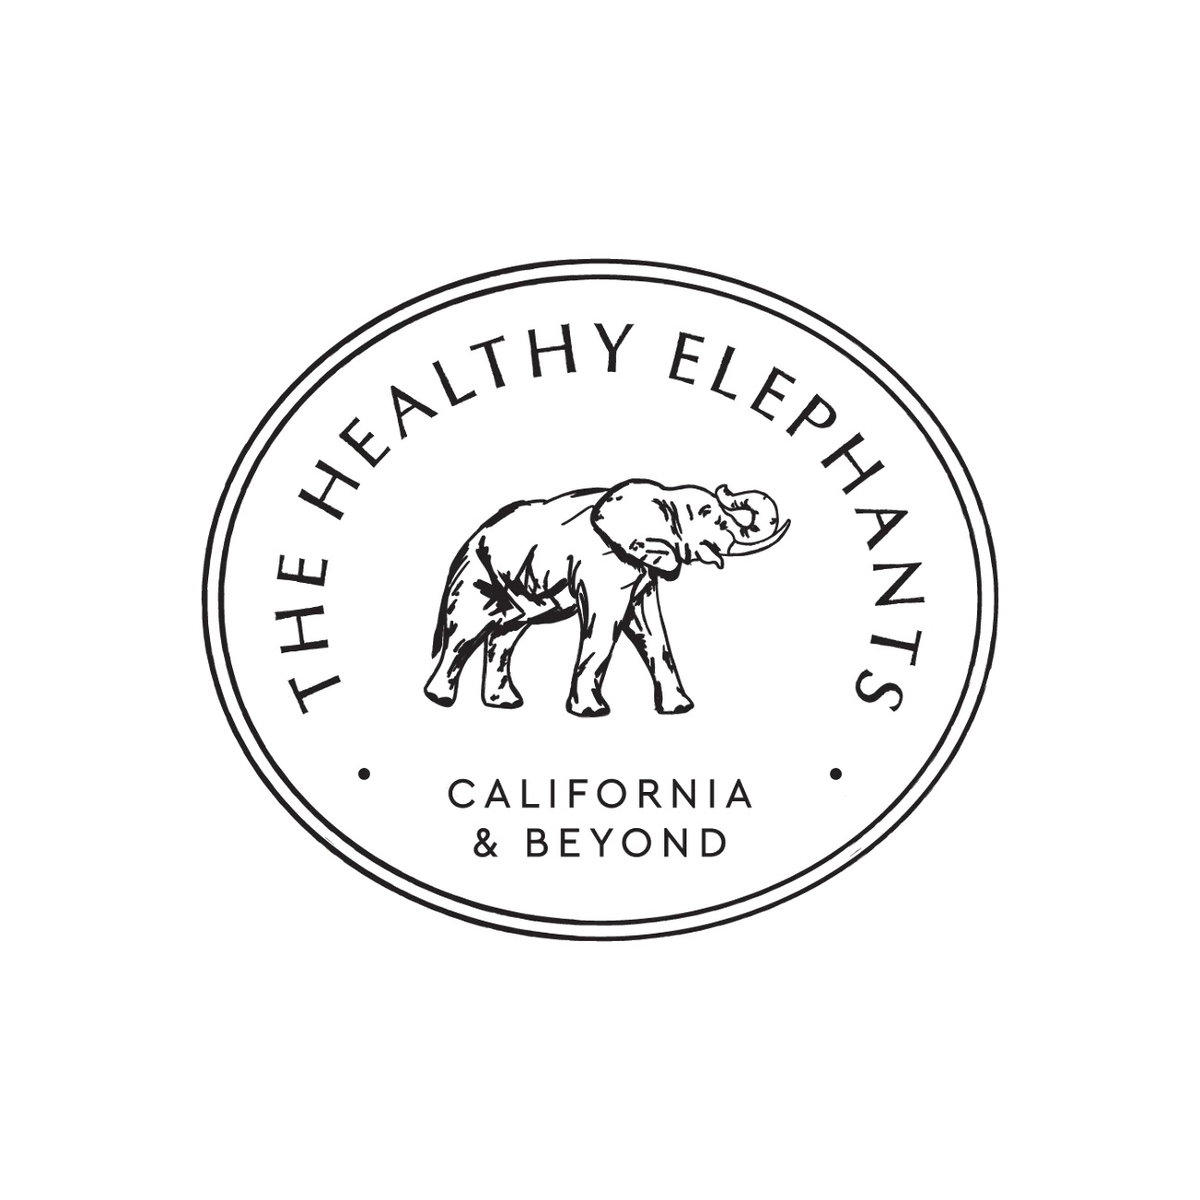 The Healthy Elephants